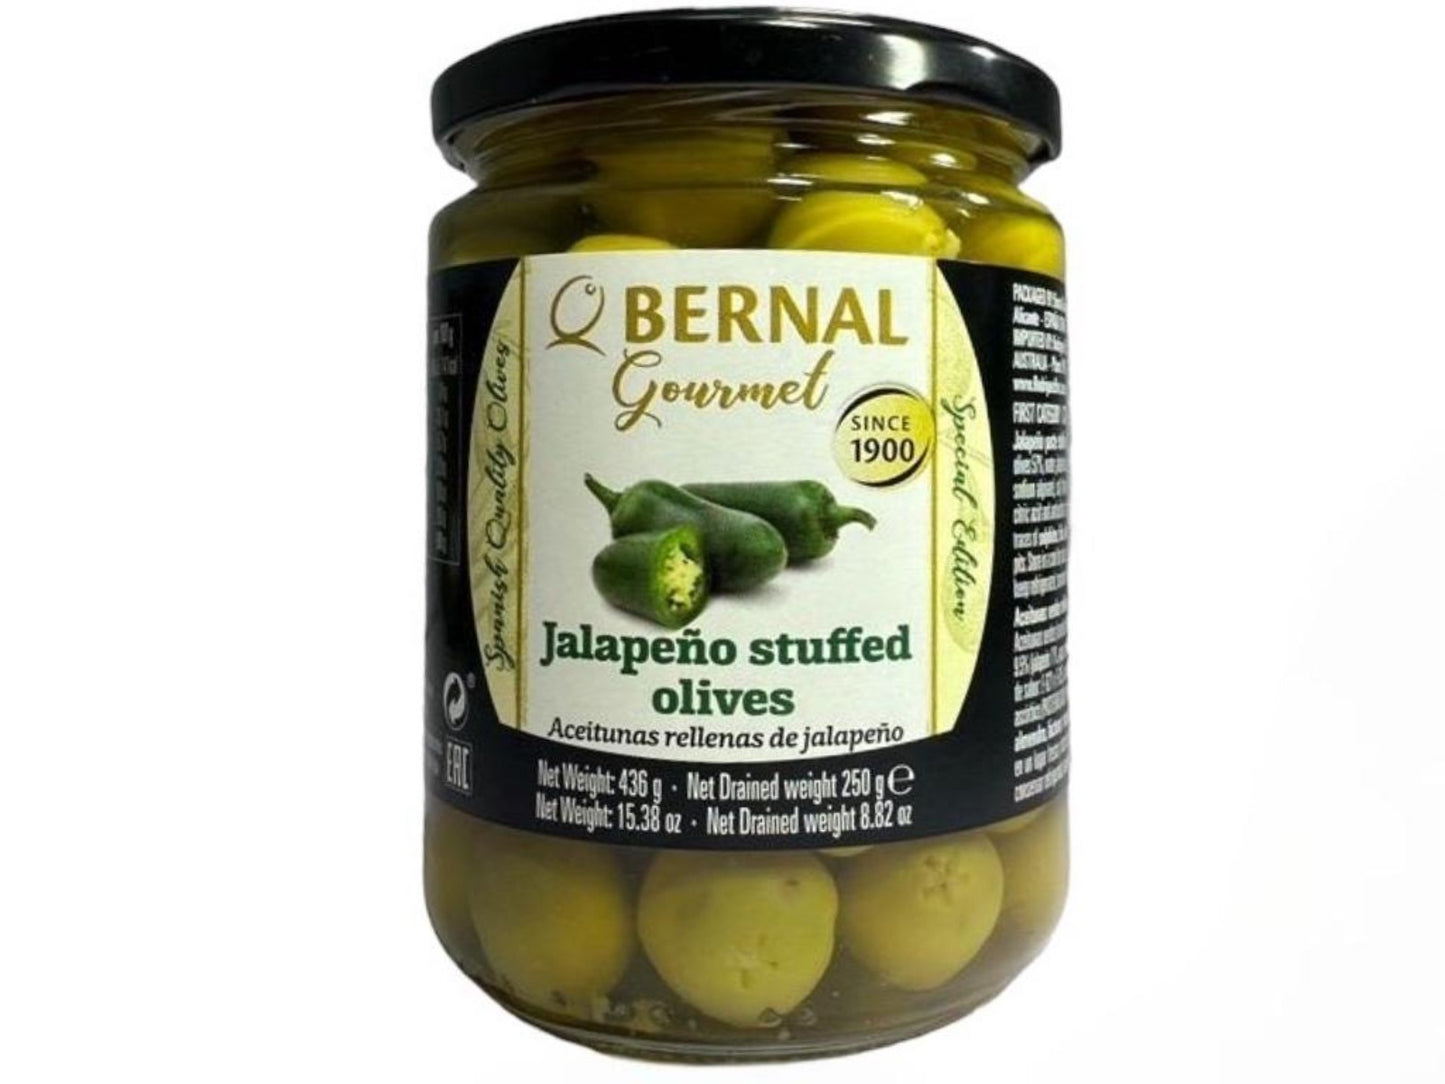 Bernal Gourmet Jalapeno Stuffed Olives 440g